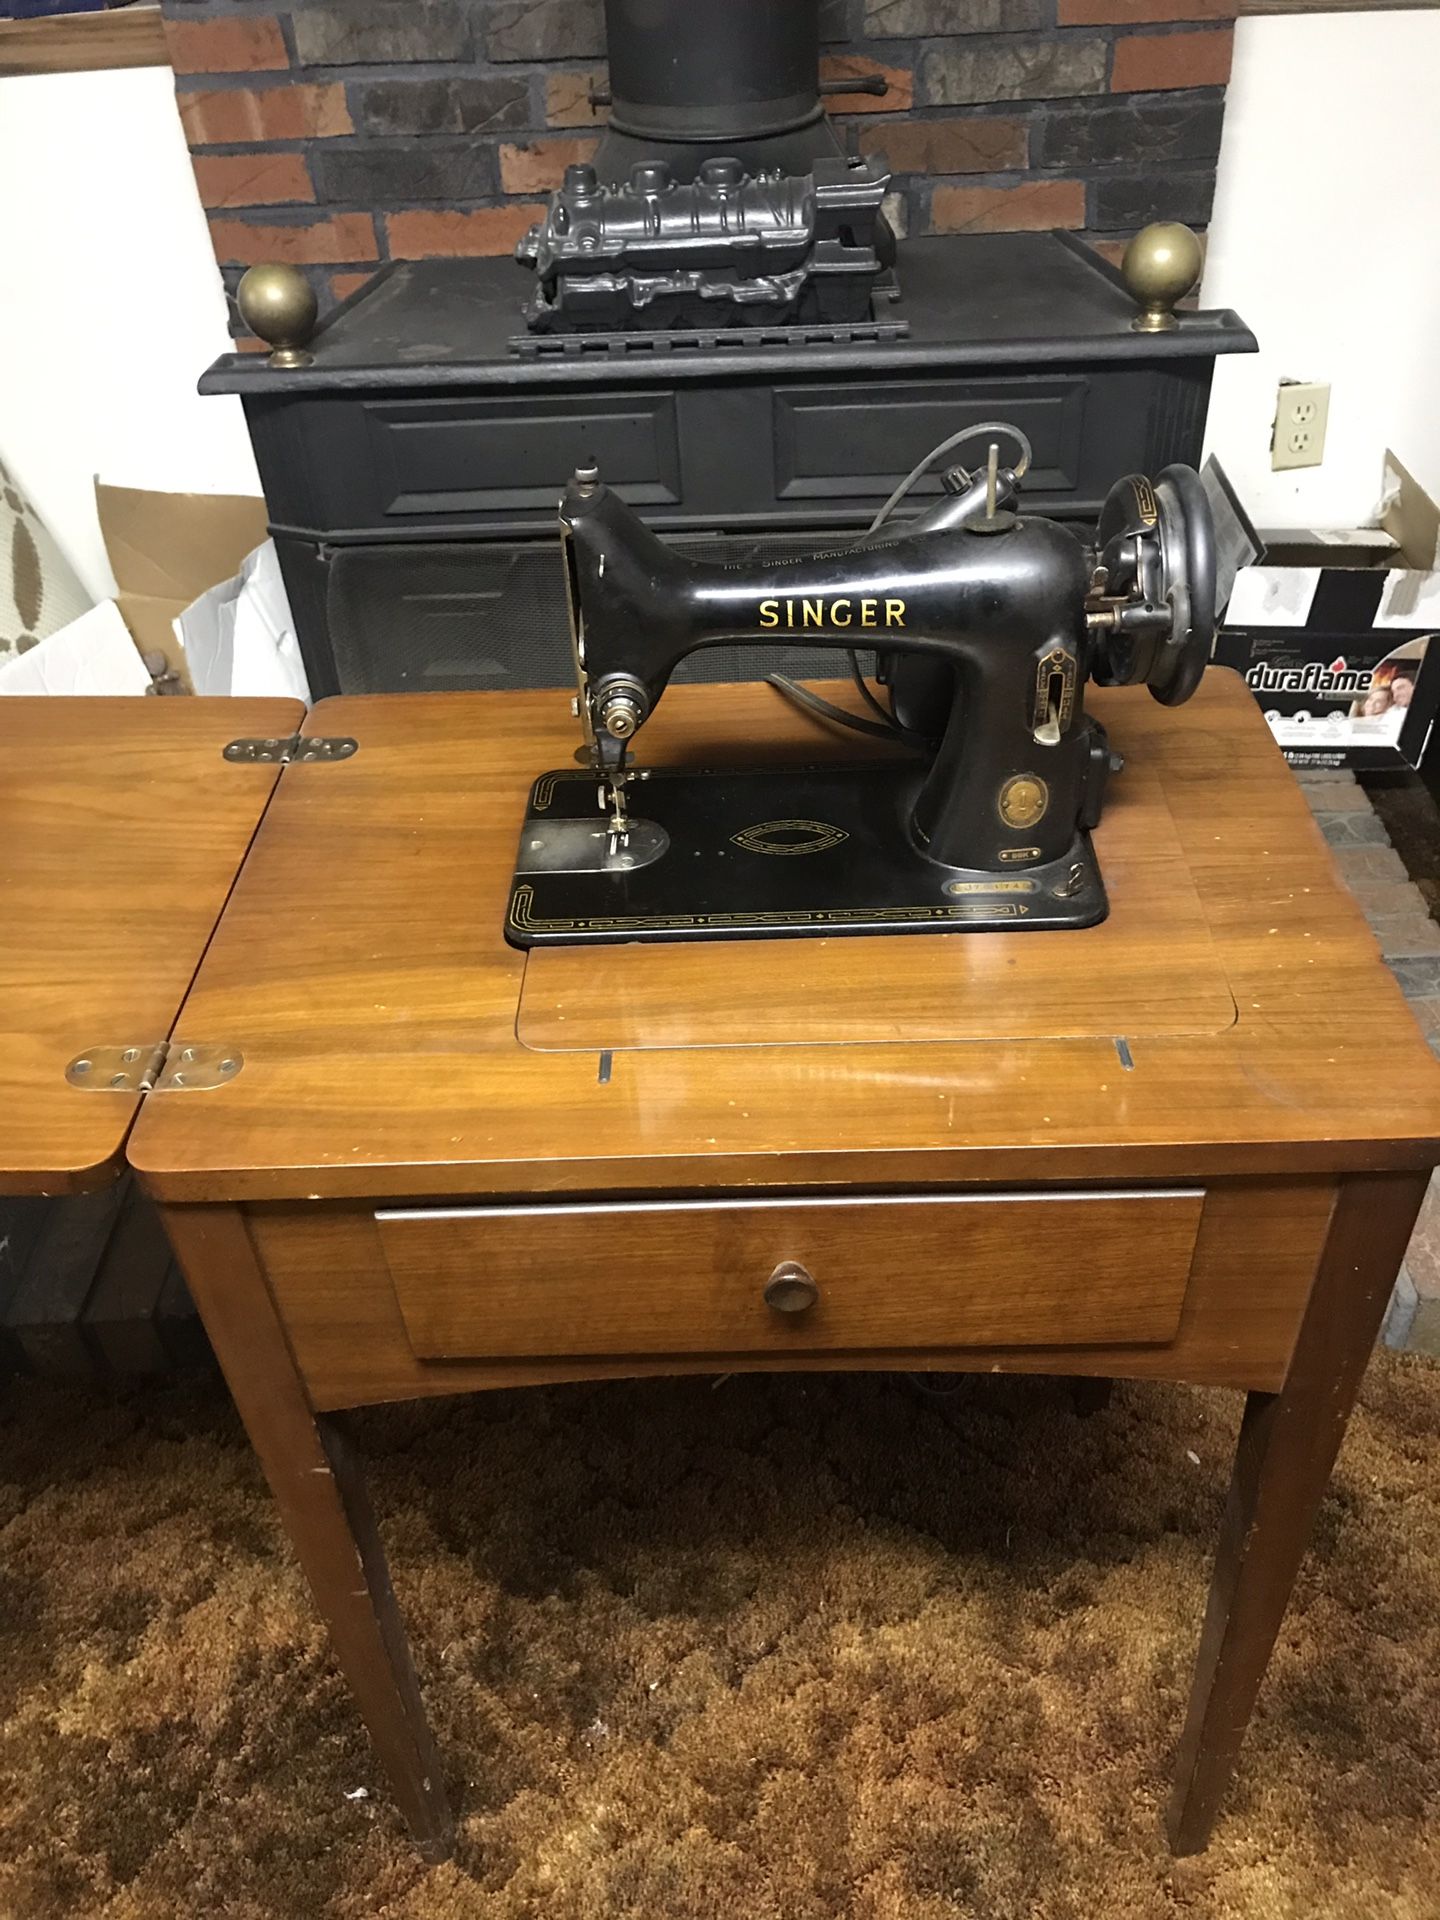 Singer sewing machine model 99